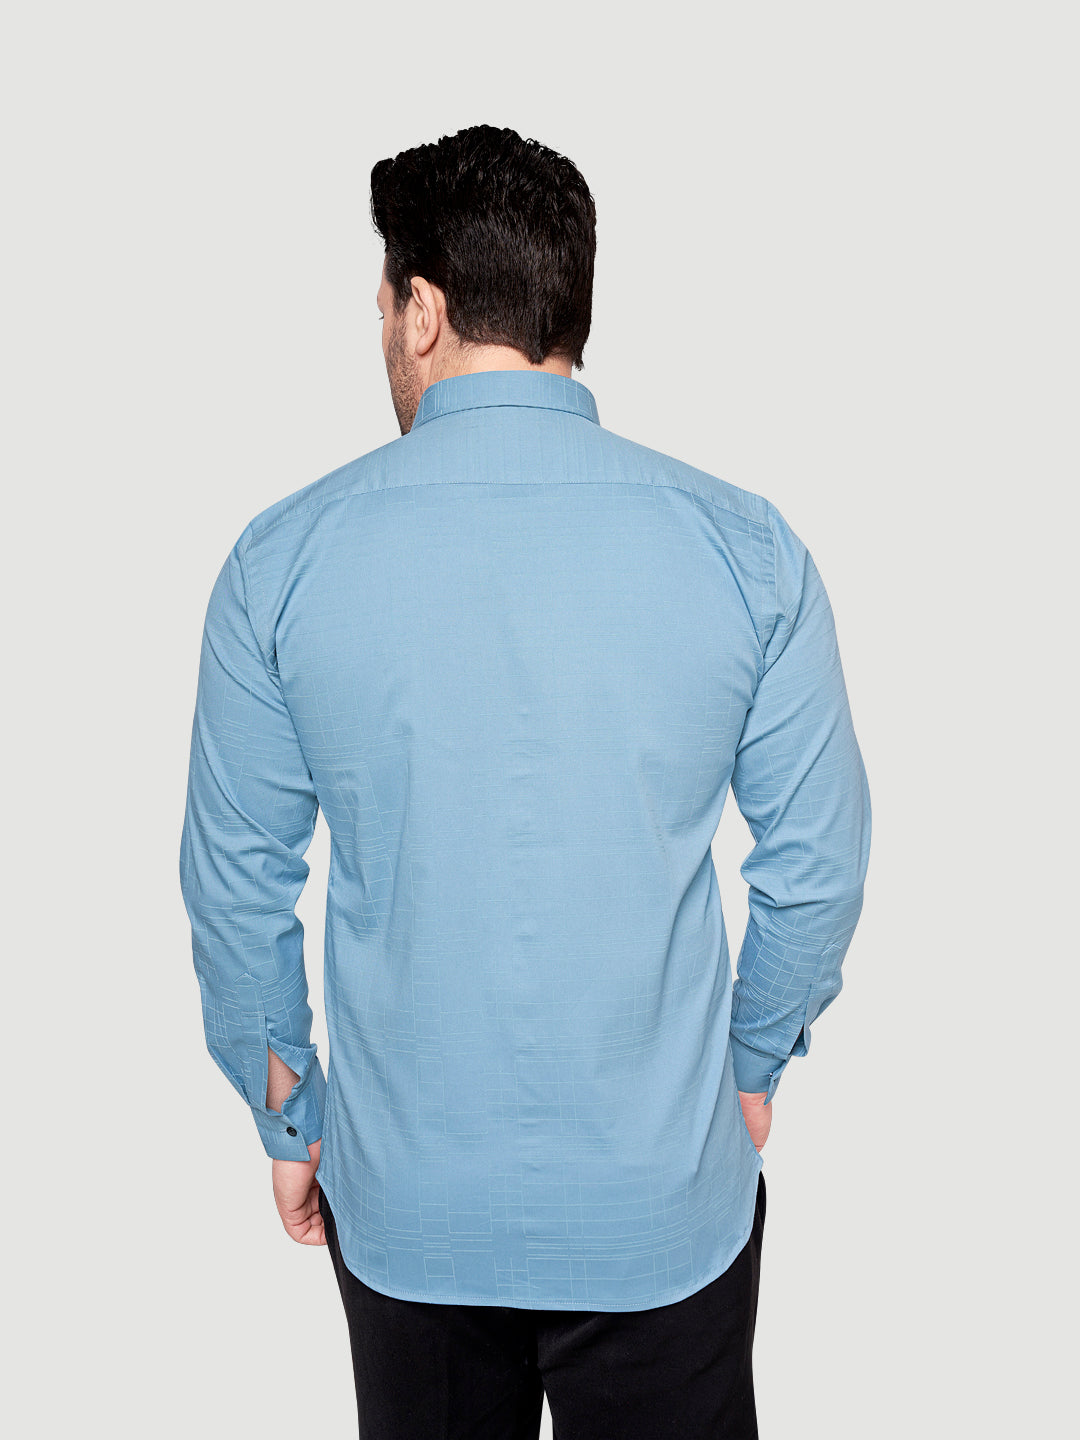 Men's Designer Shirt with Collar Accessory & Broach-4